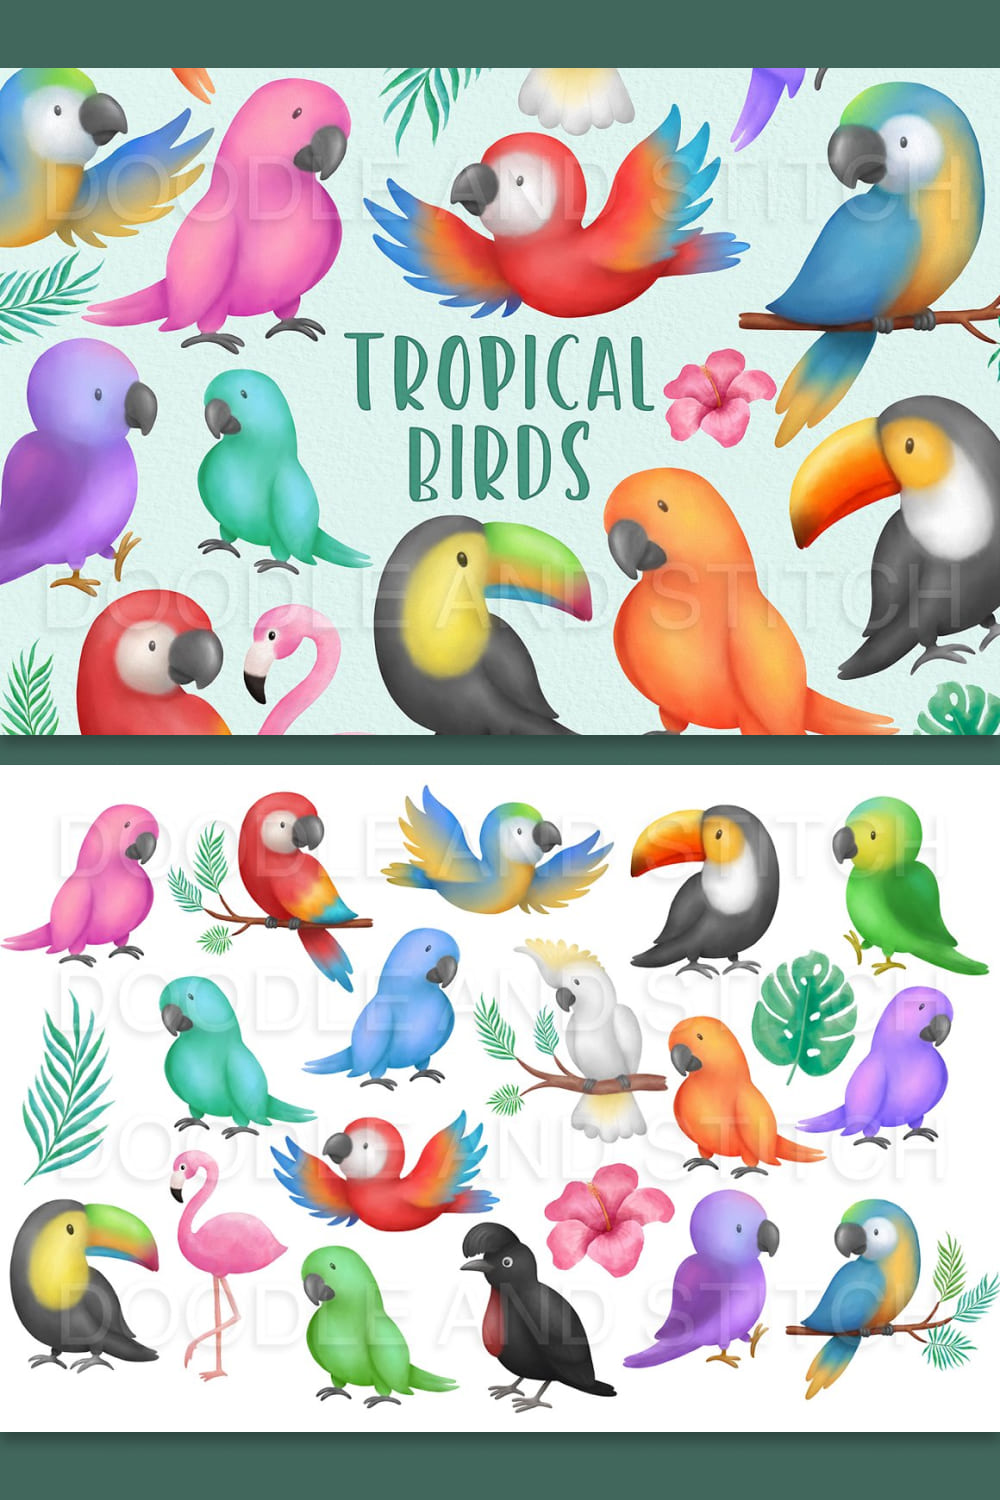 Tropical birds watercolor clipart - pinterest image preview.